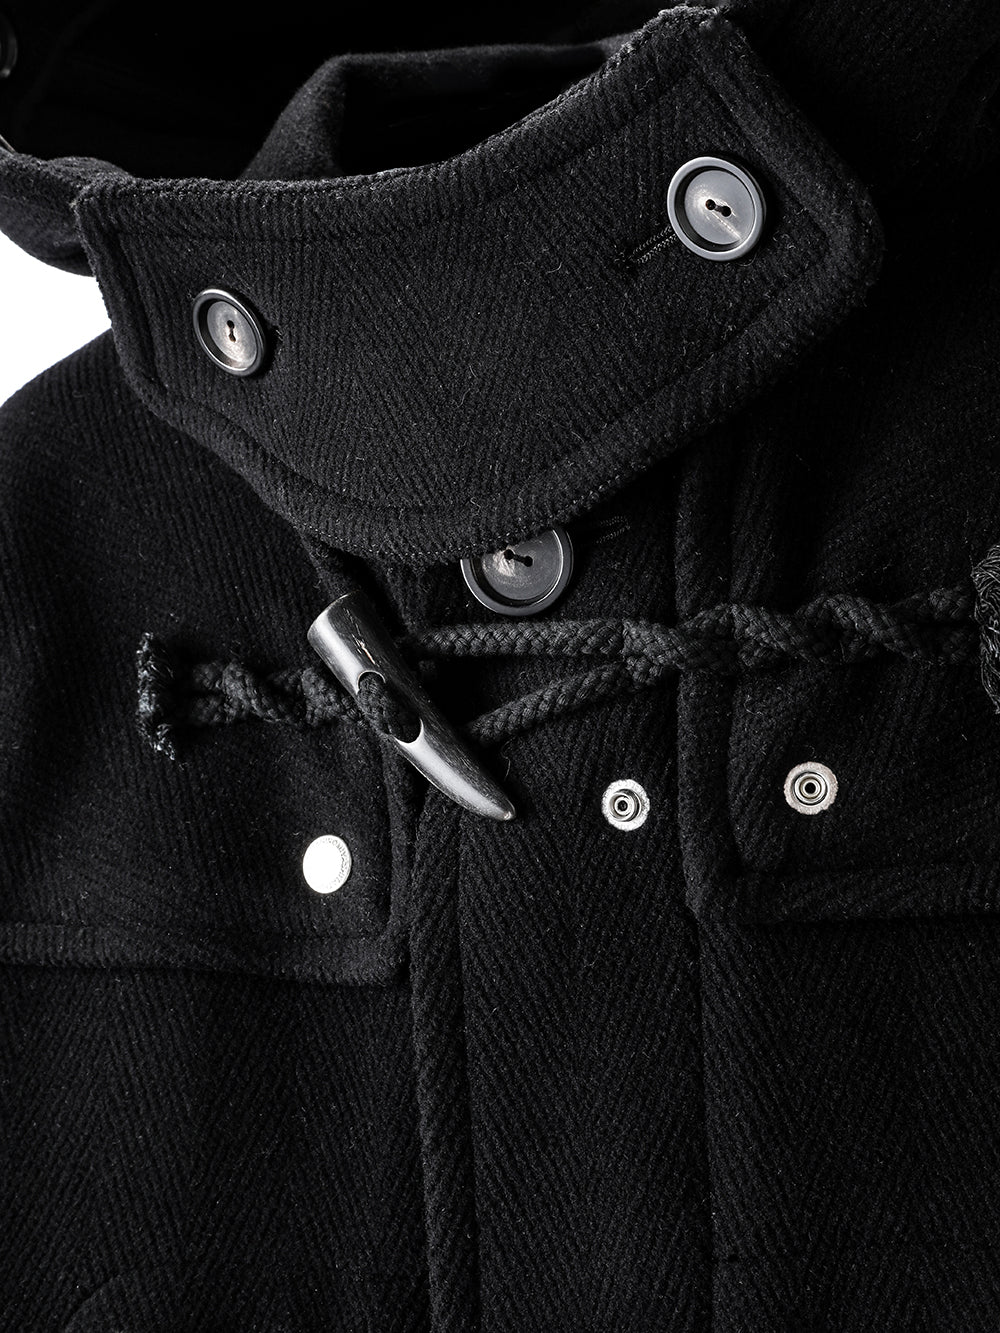 right - left pencil silhouette duffle coat.